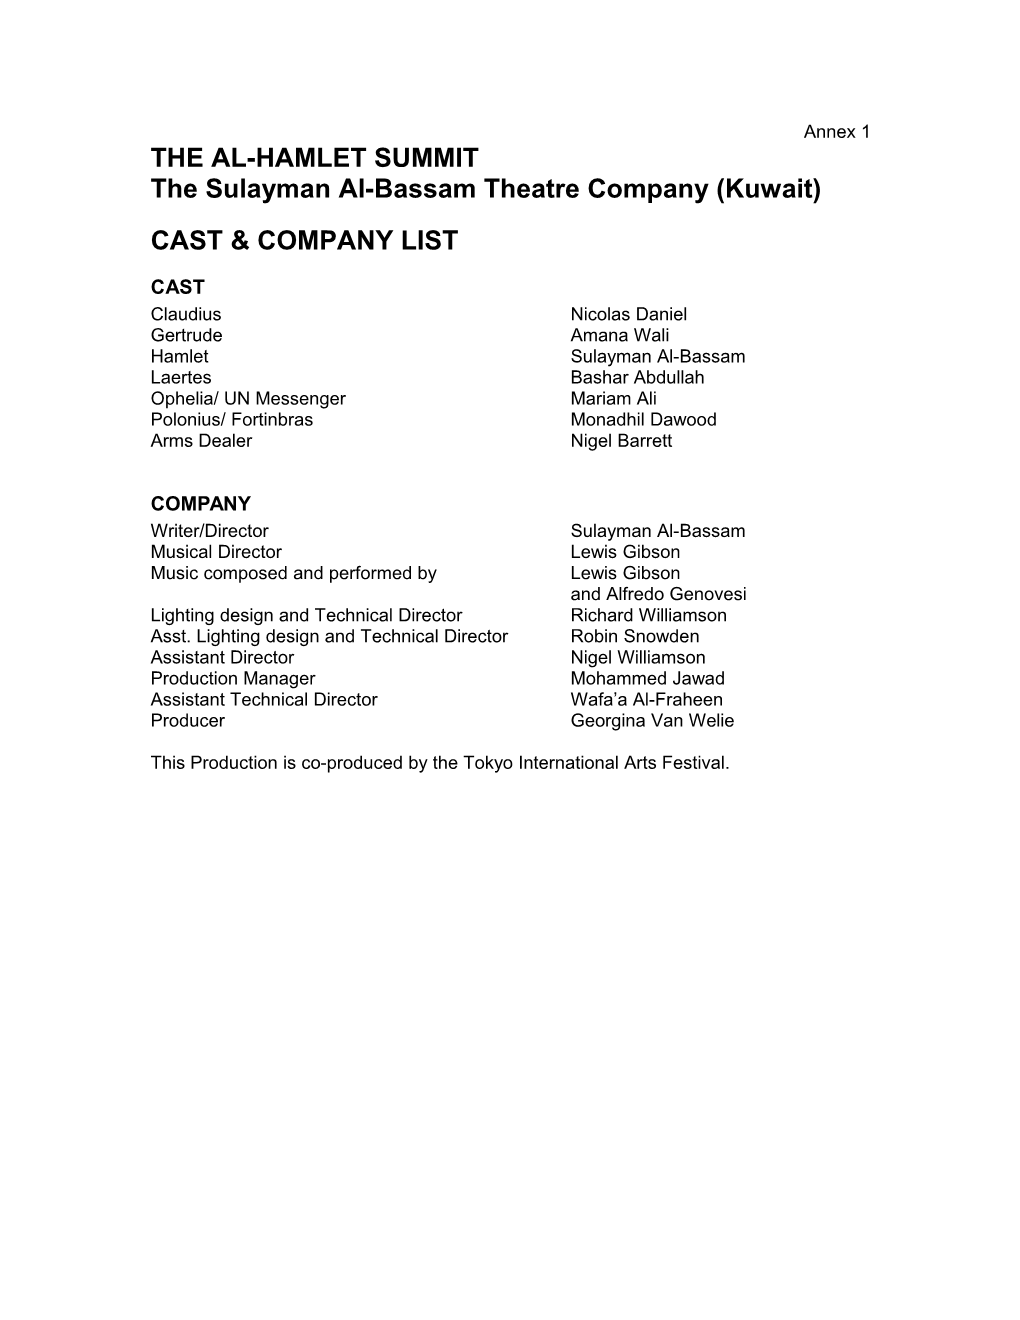 The Sulayman Al-Bassam Theatre Company (Kuwait)